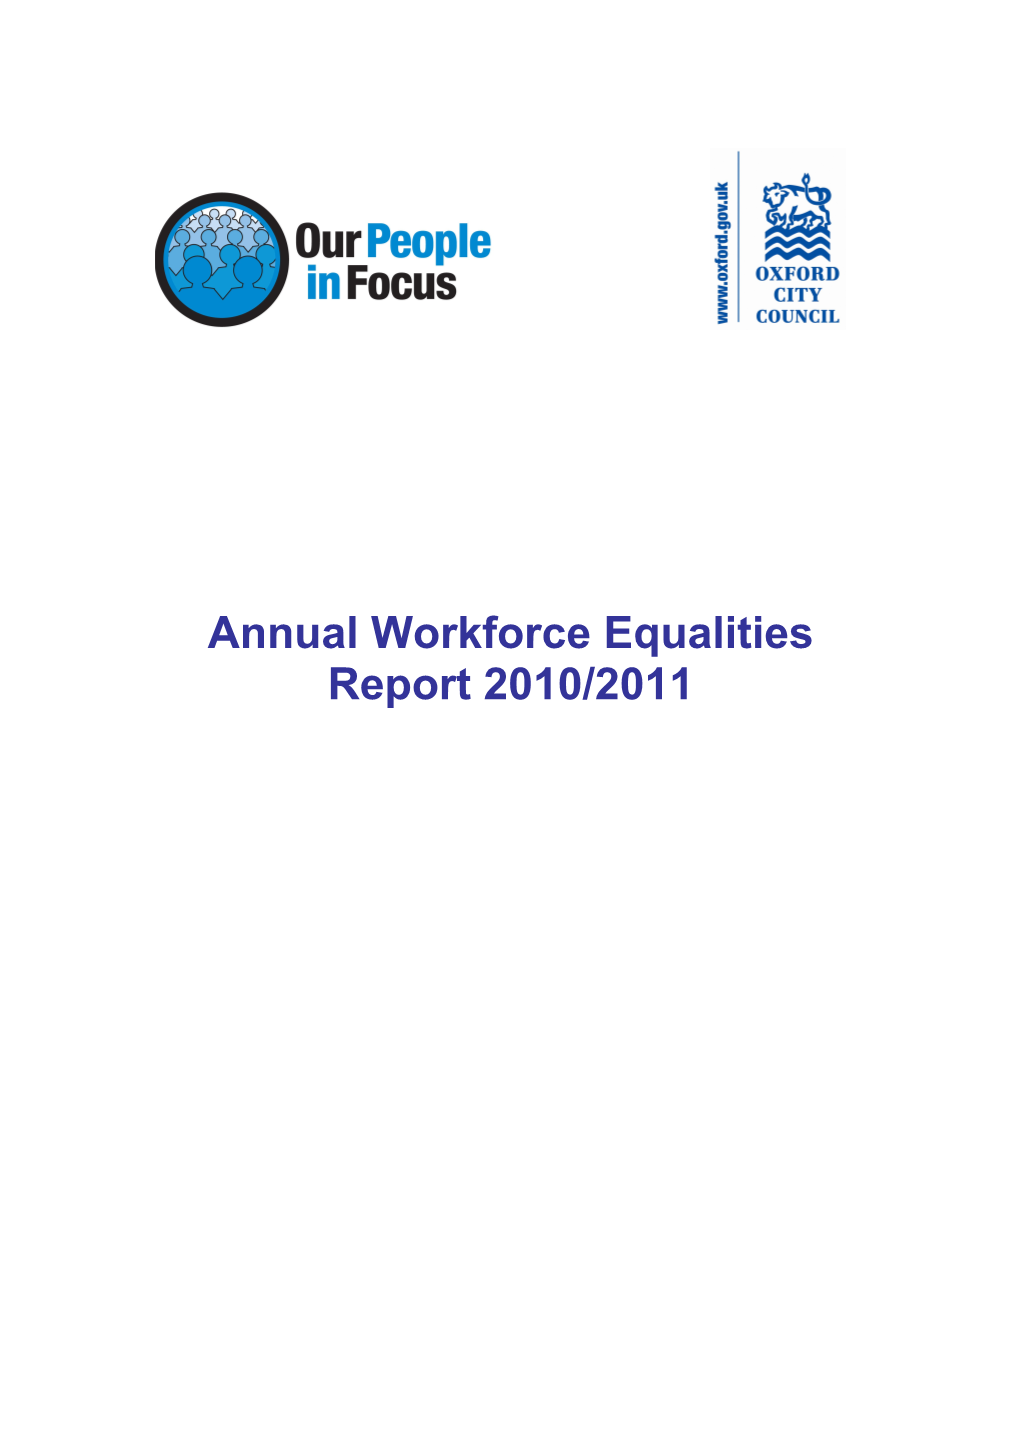 Annual Workforce Equalities Report 2010/ 2011